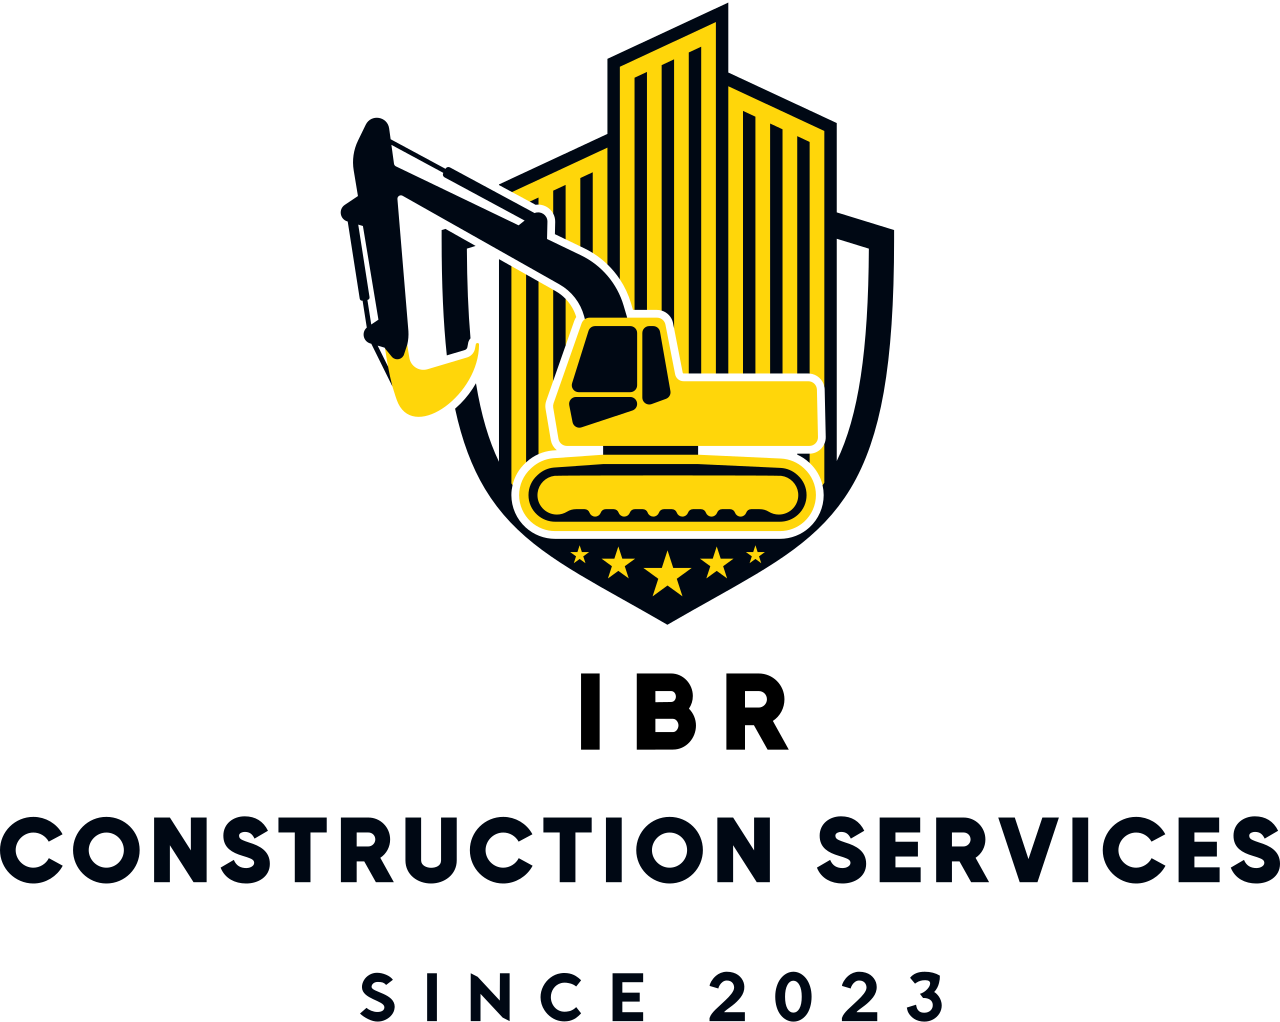  Construction Services's web page